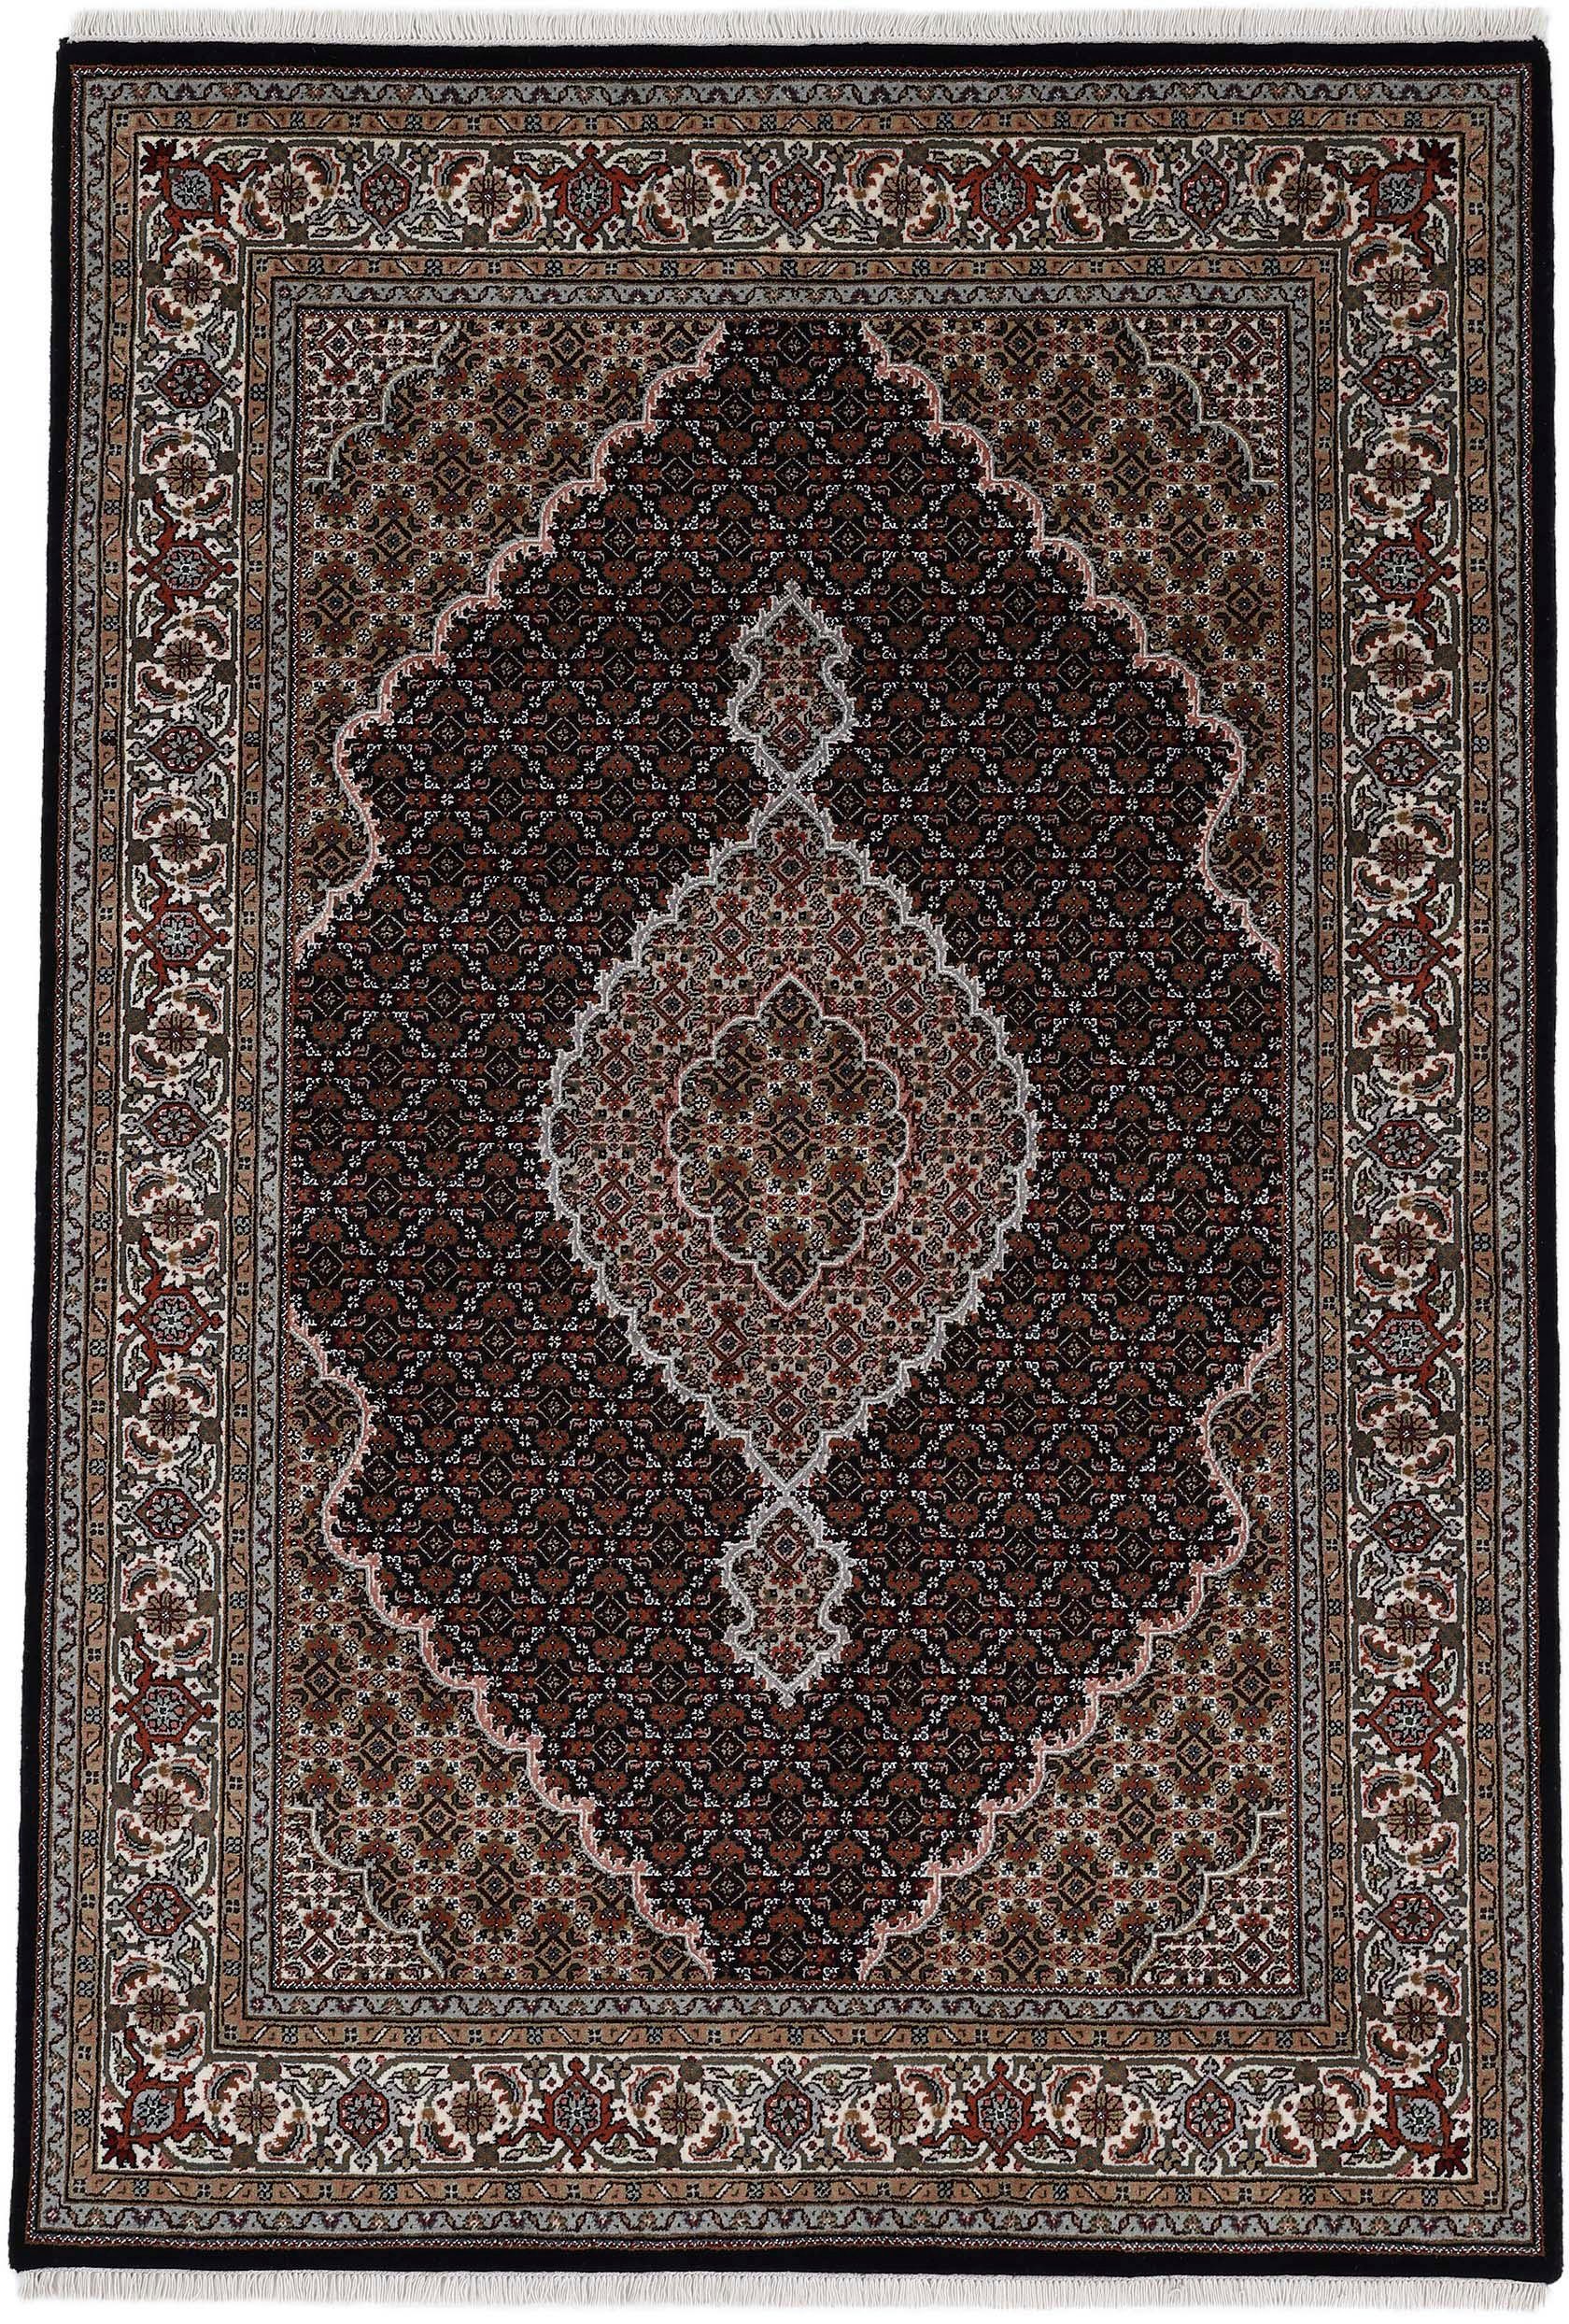 Woven Arts Oosters tapijt Tabriz Mahi met de hand geknoopt, woonkamer, zuivere wol